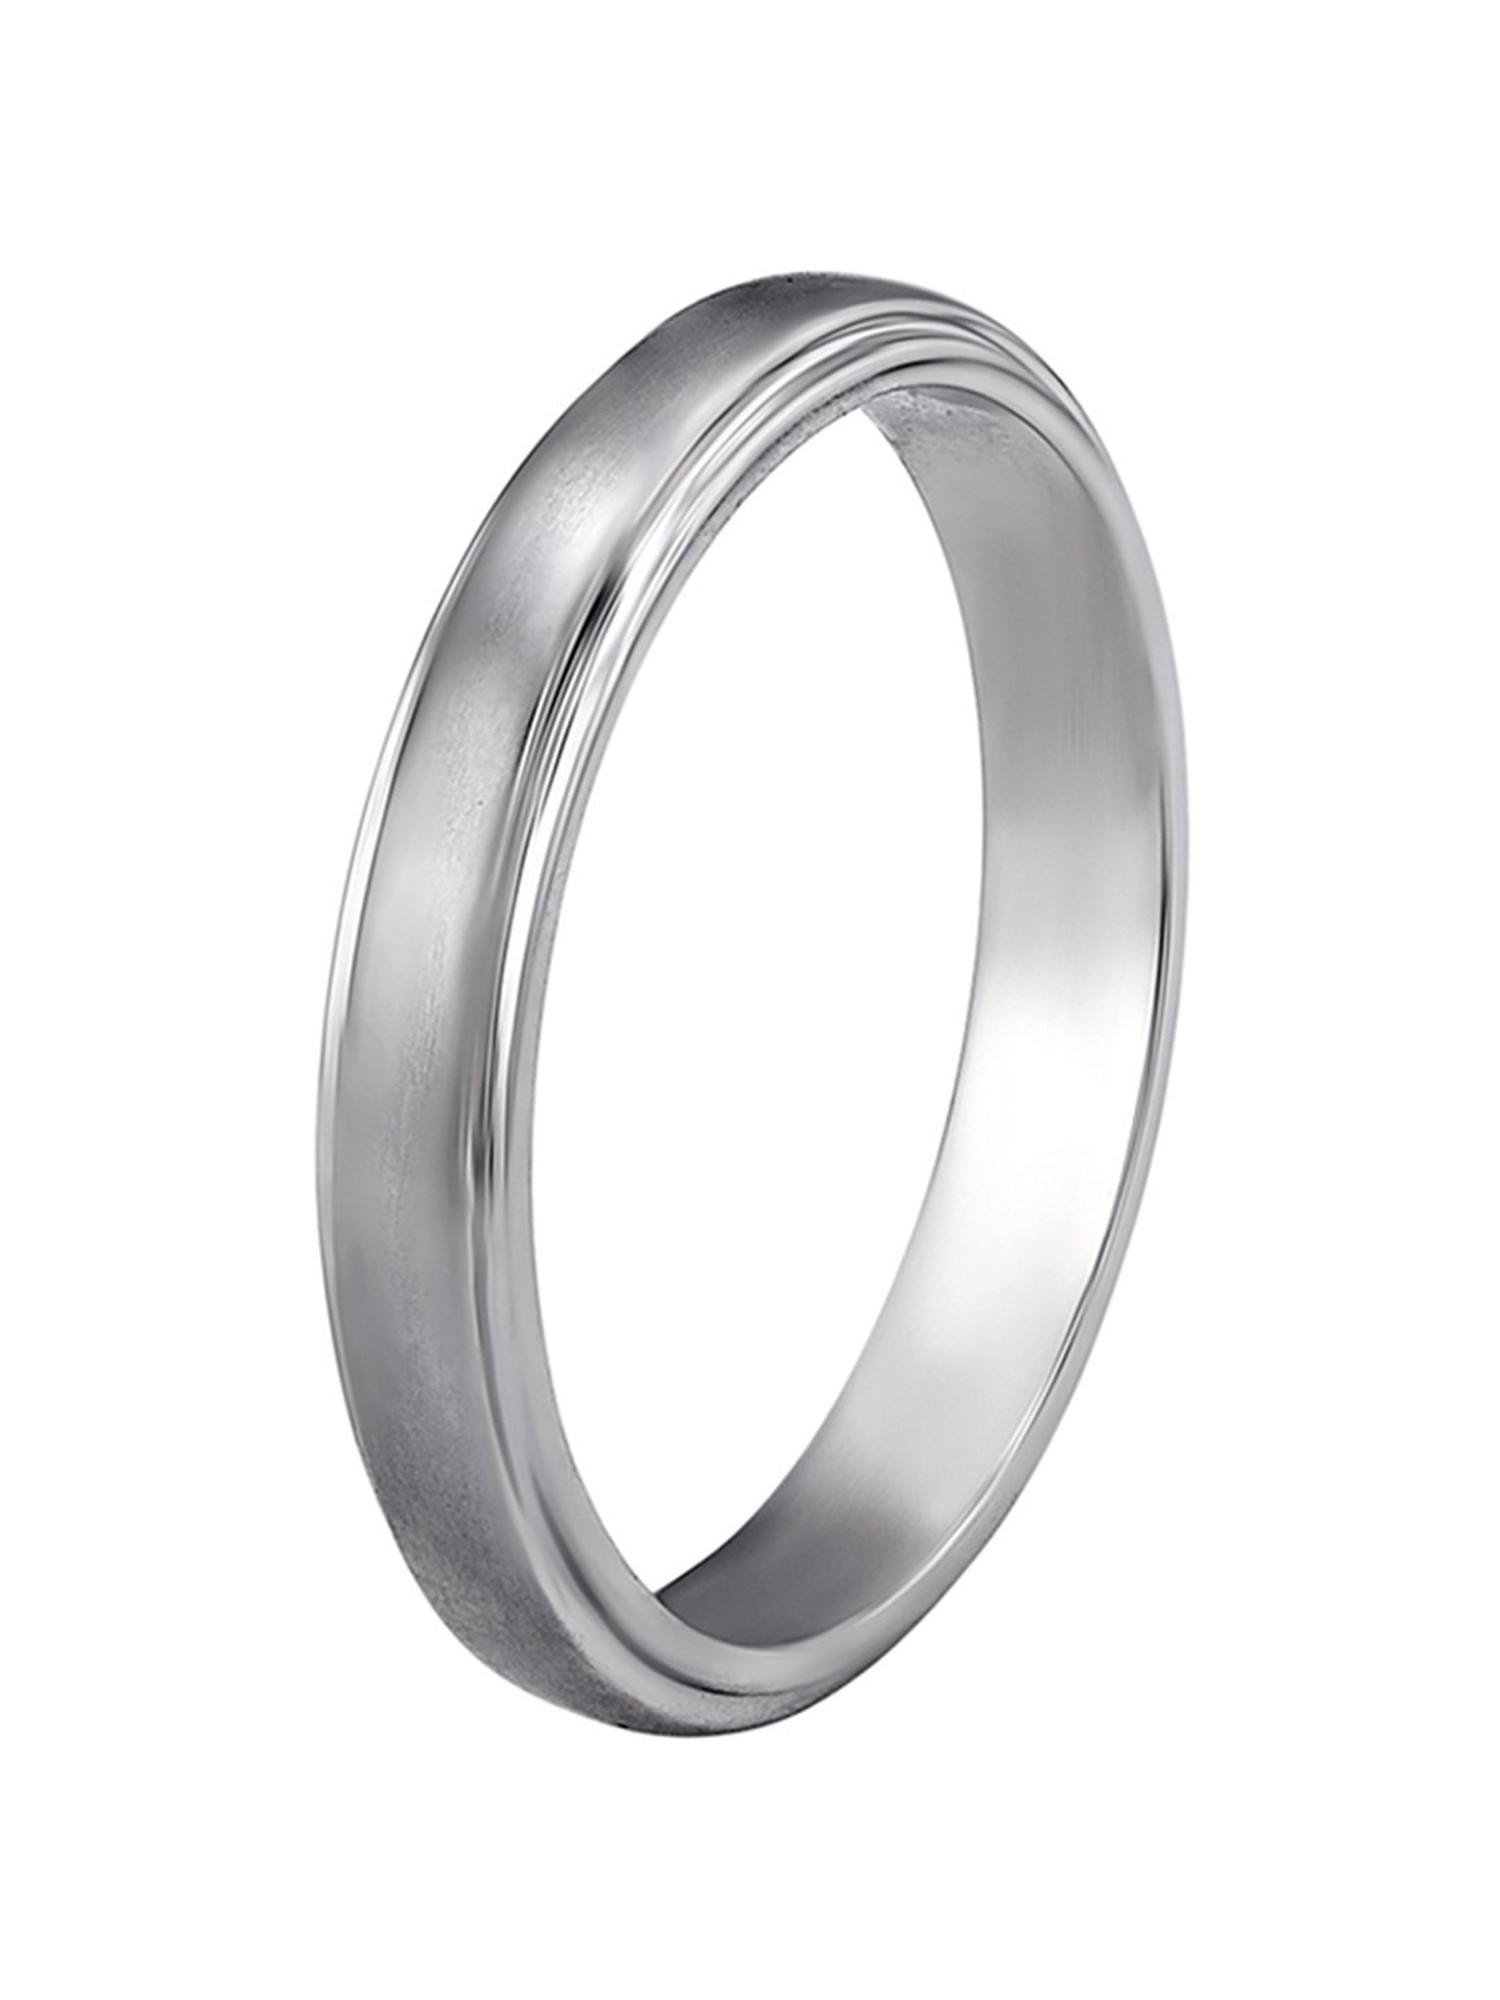 Buy Platinum Rings For Men Online At Best Prices | CaratLane-happymobile.vn